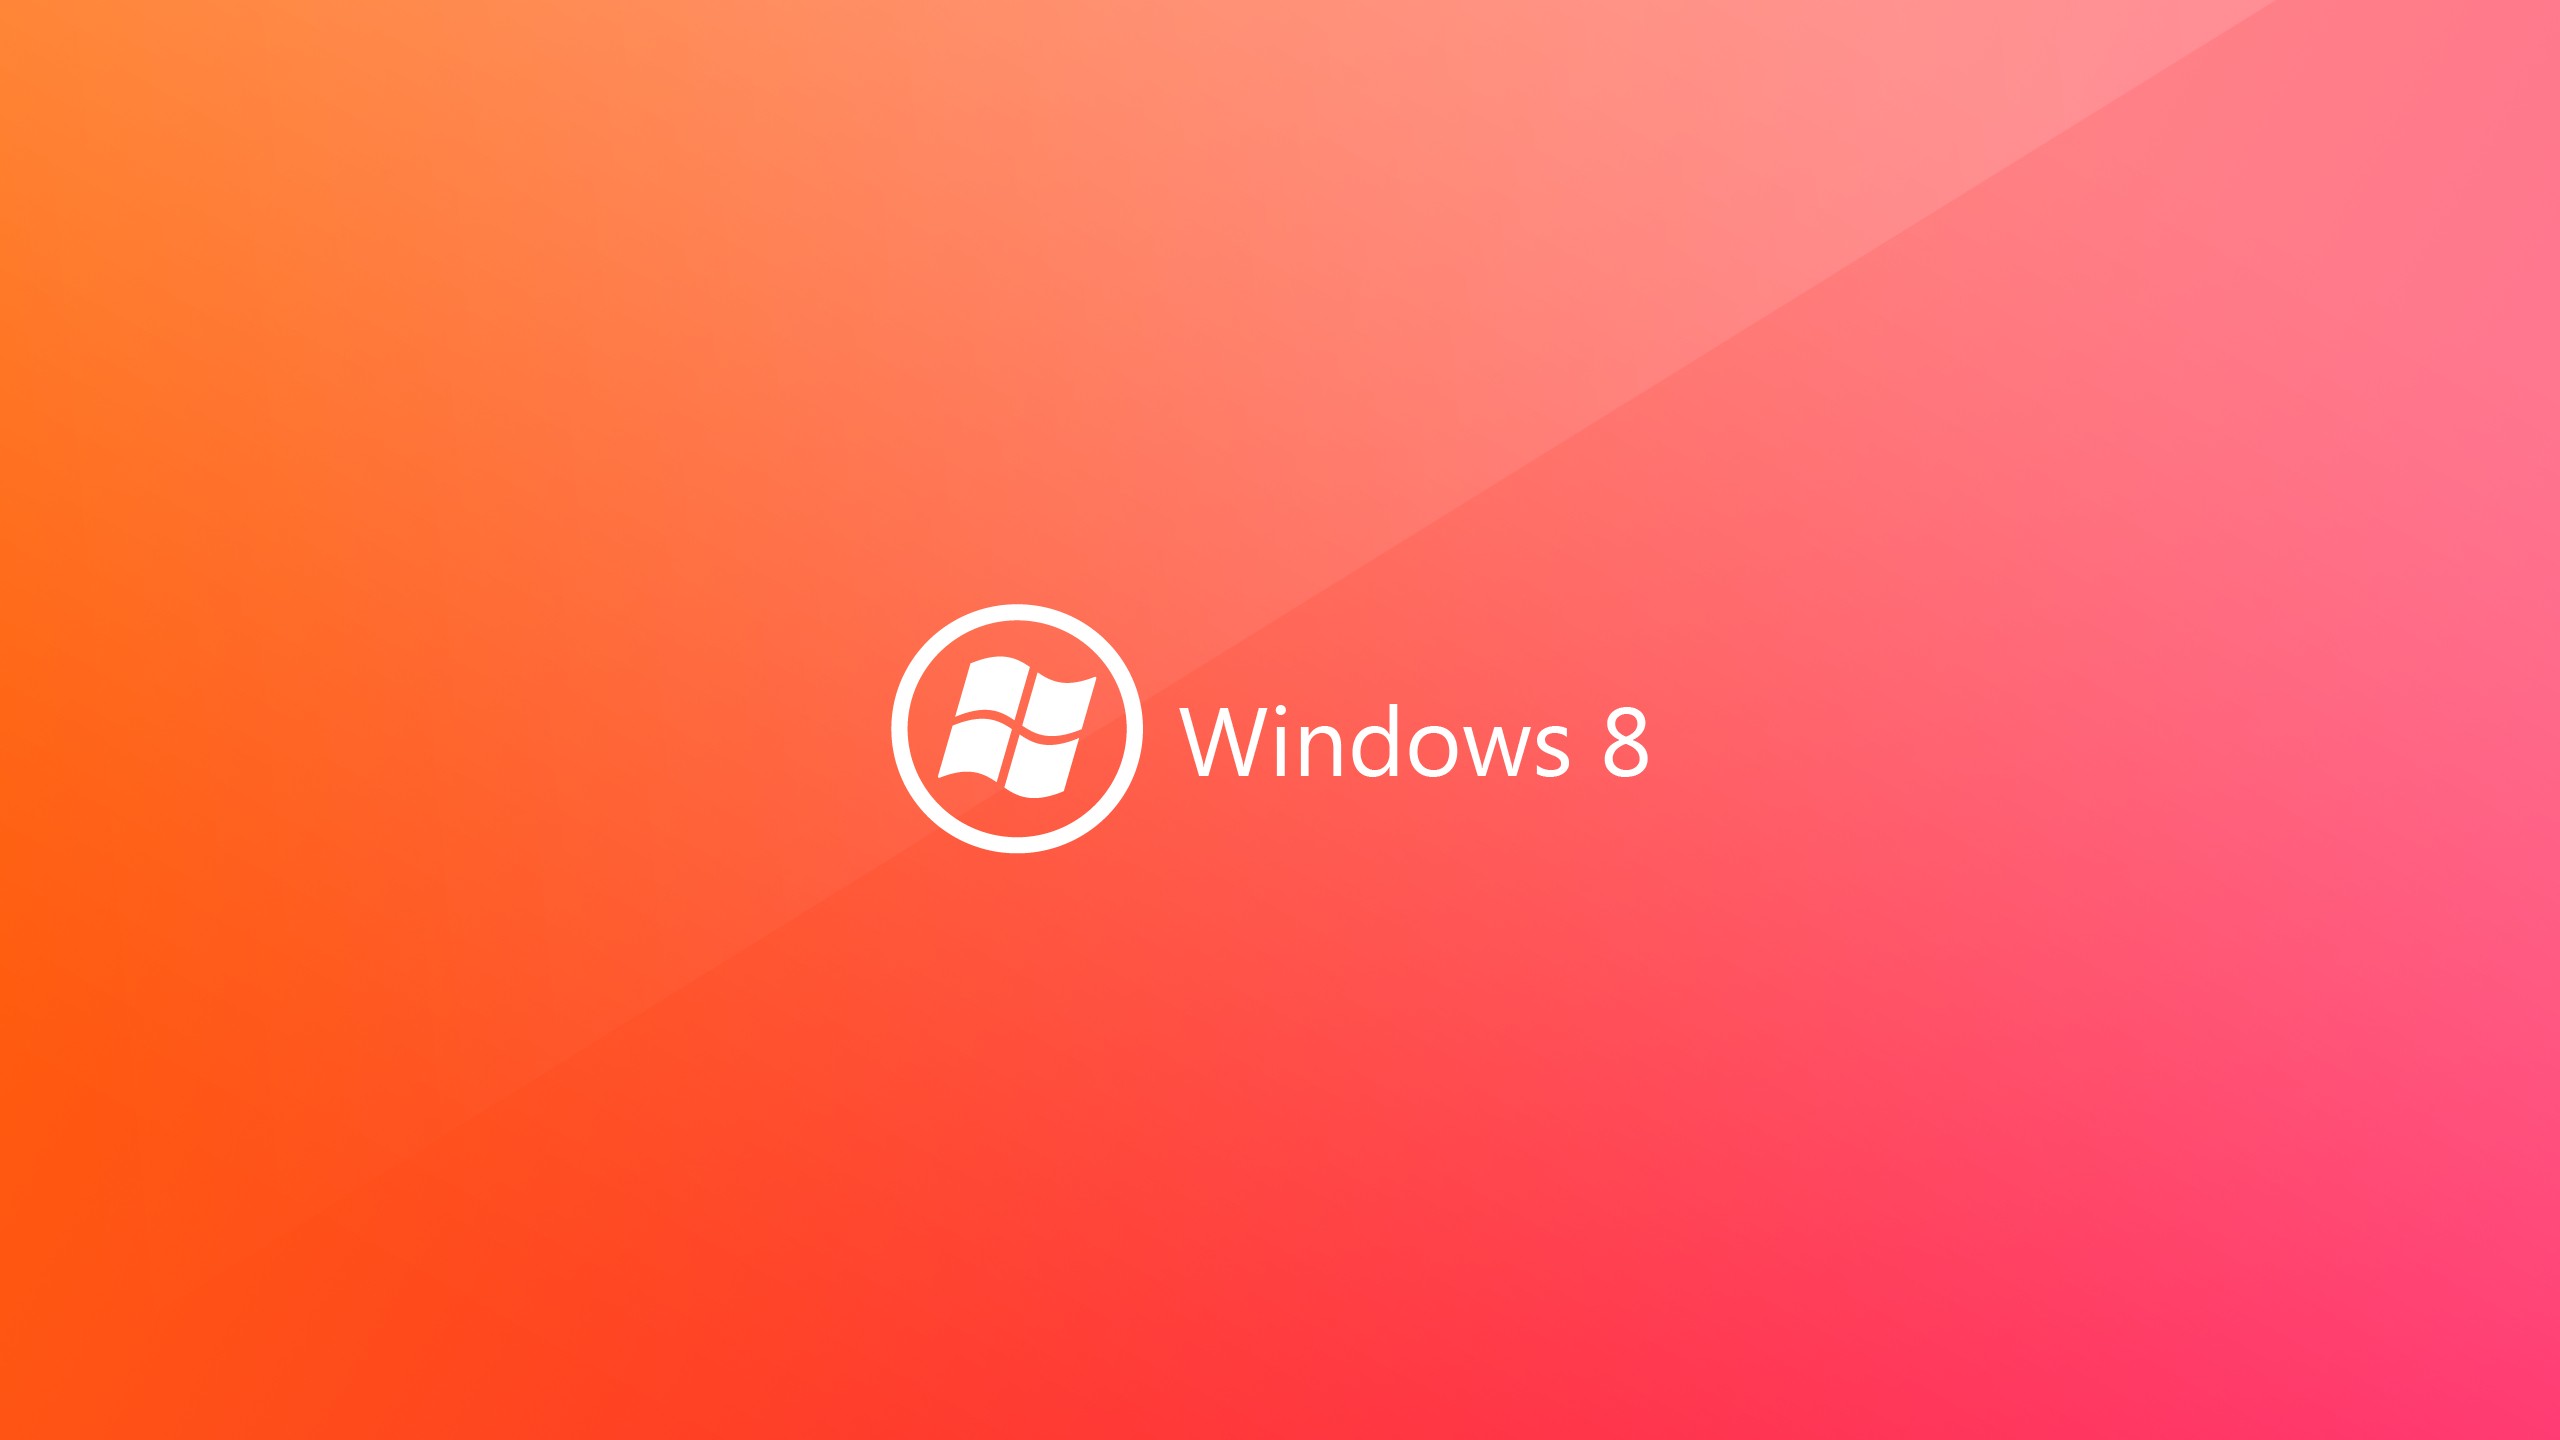 General 2560x1440 Windows 8 Microsoft Windows gradient logo operating system